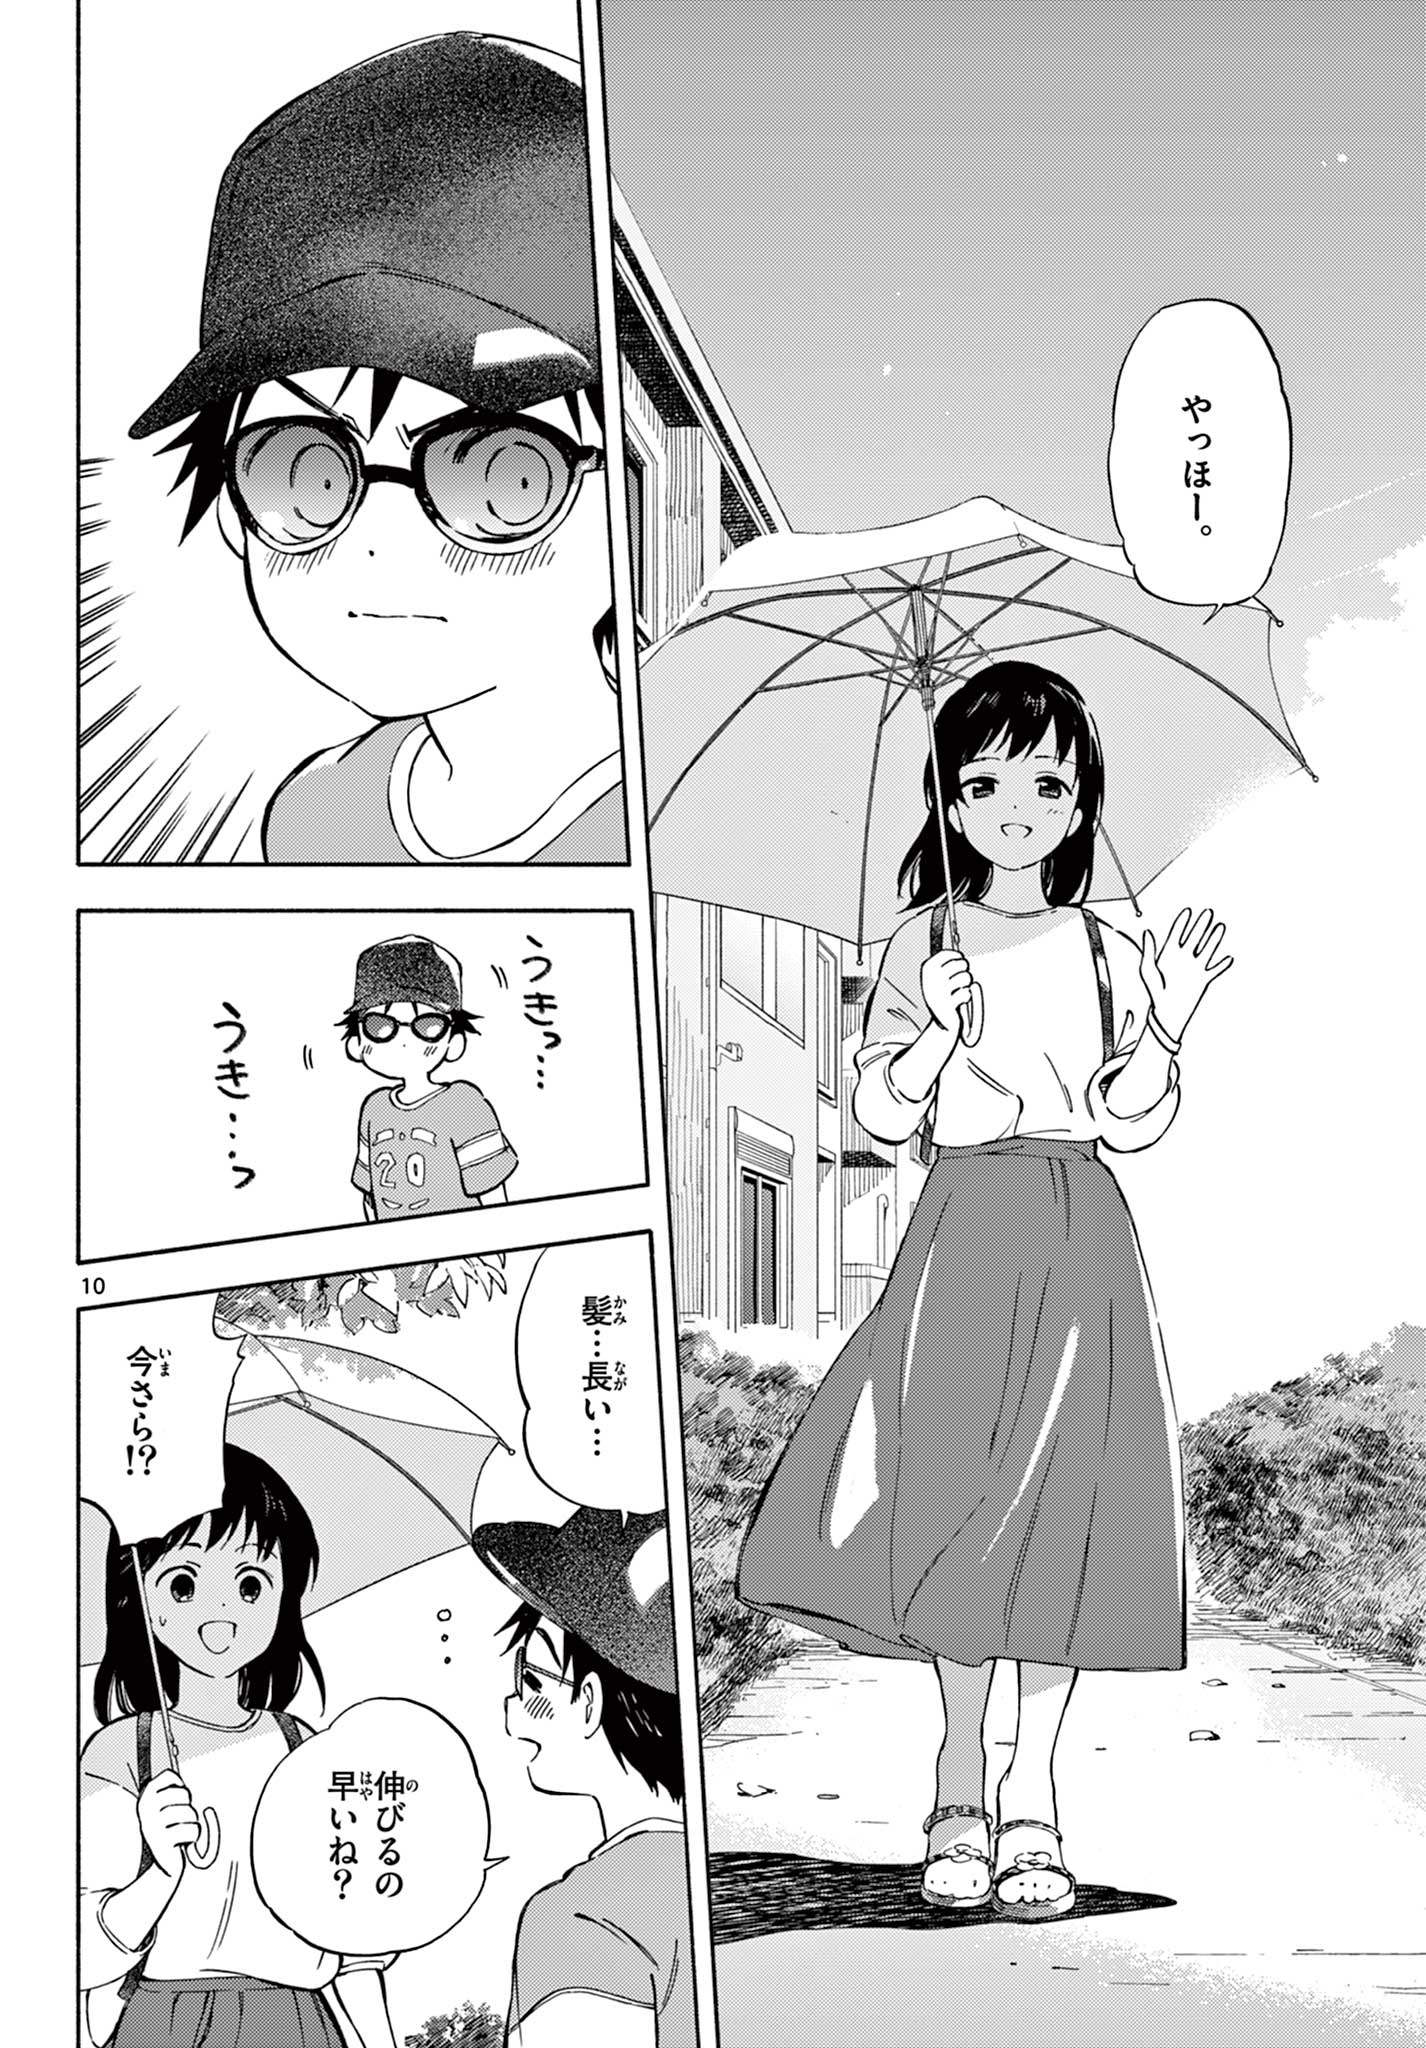 Nami no Shijima no Horizont - Chapter 9.1 - Page 10